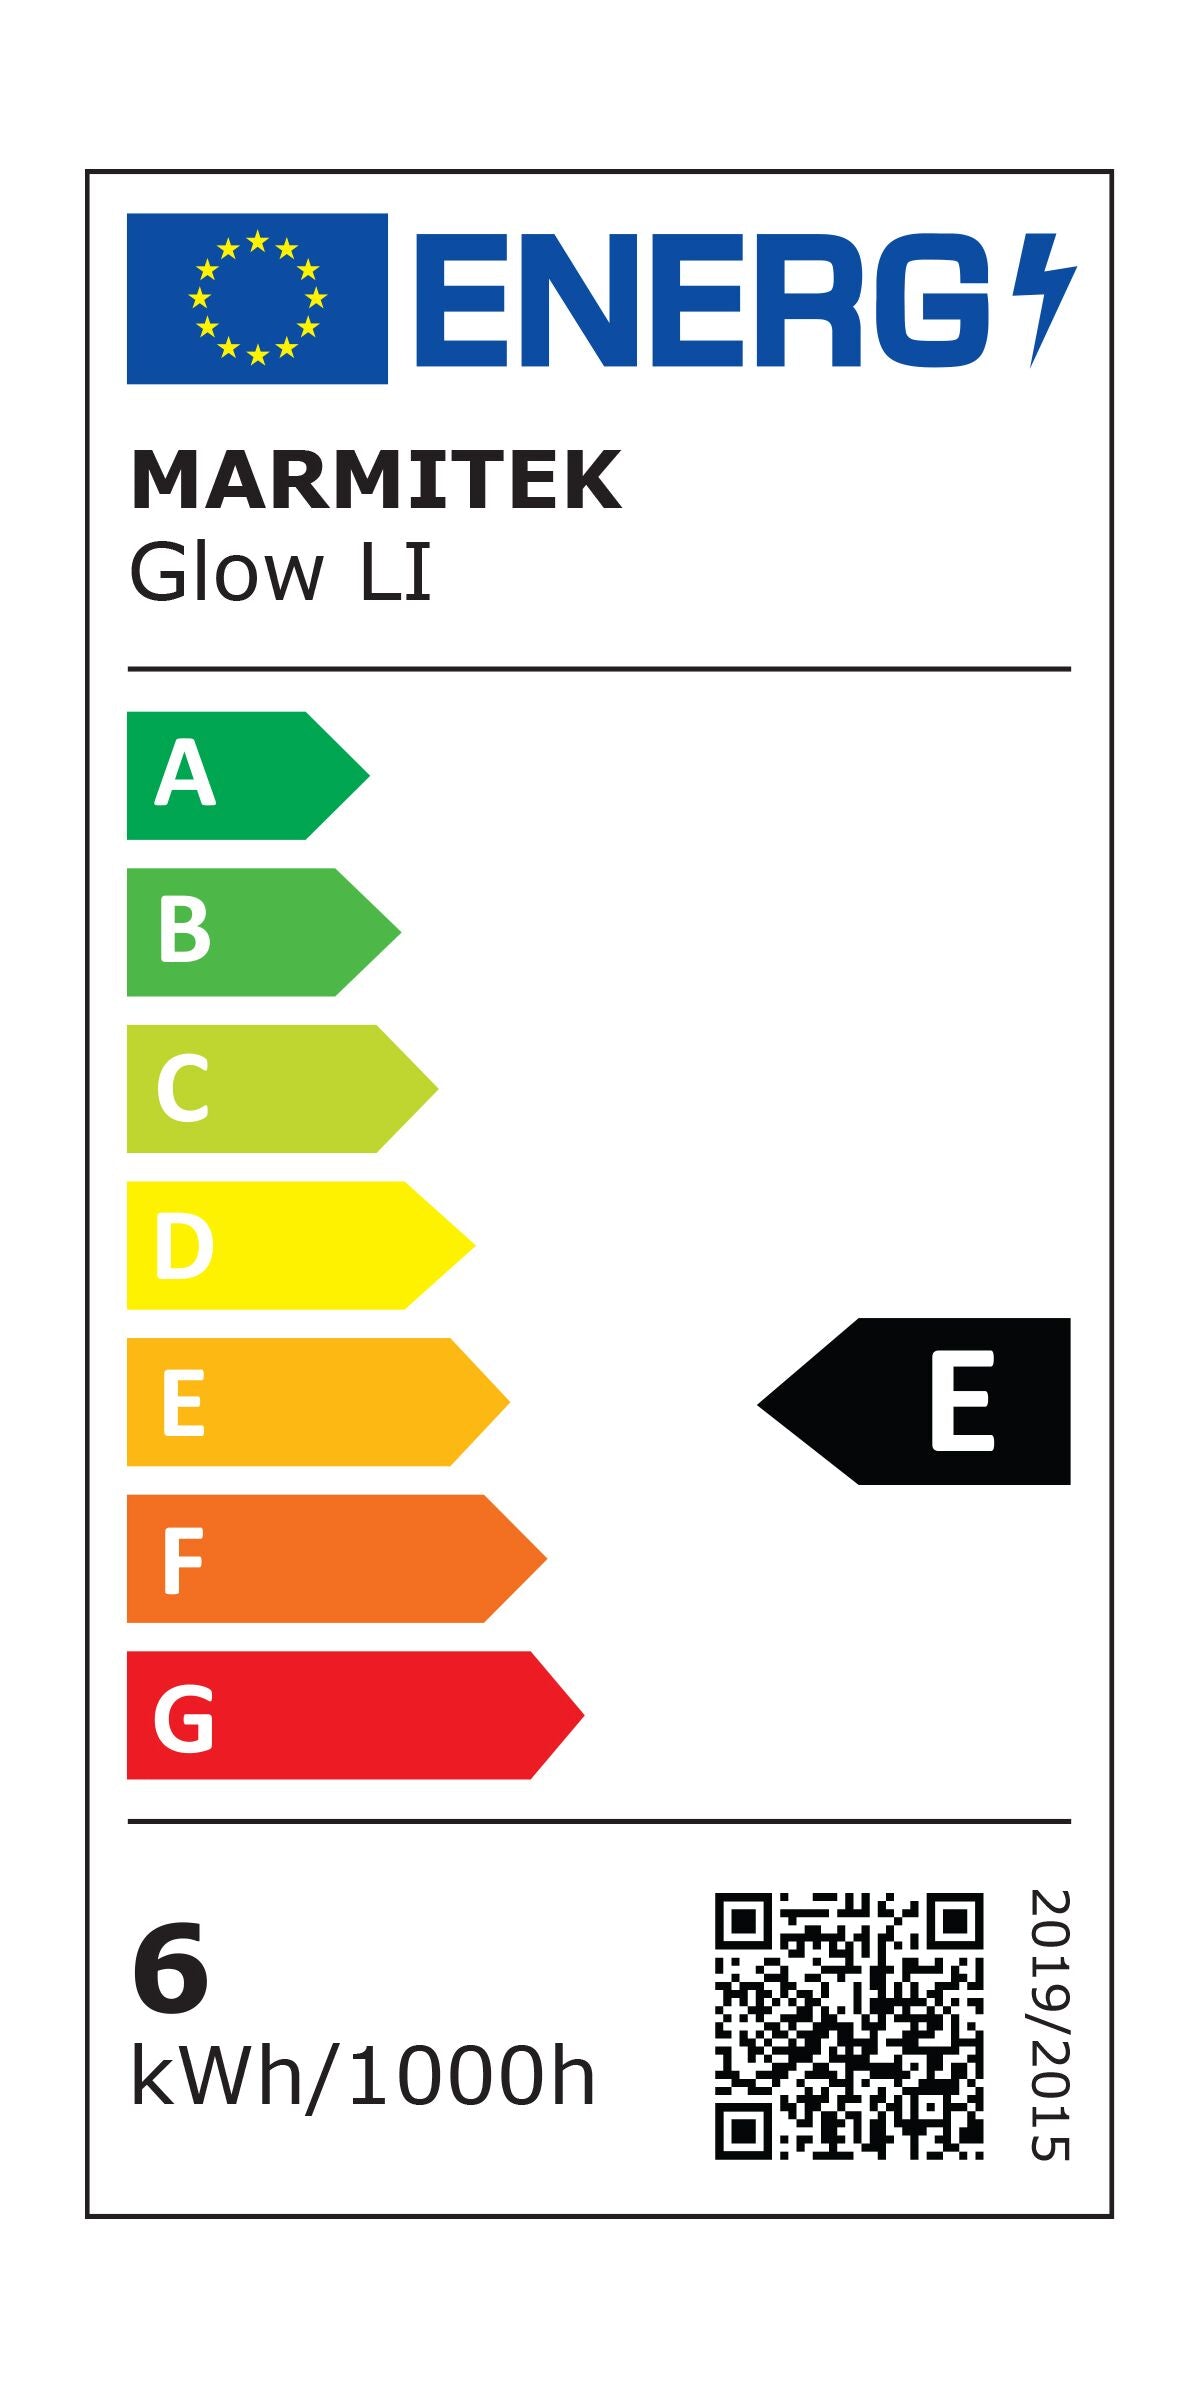 Glow LI - Filament bulb - Energy Label E Image | Marmitek